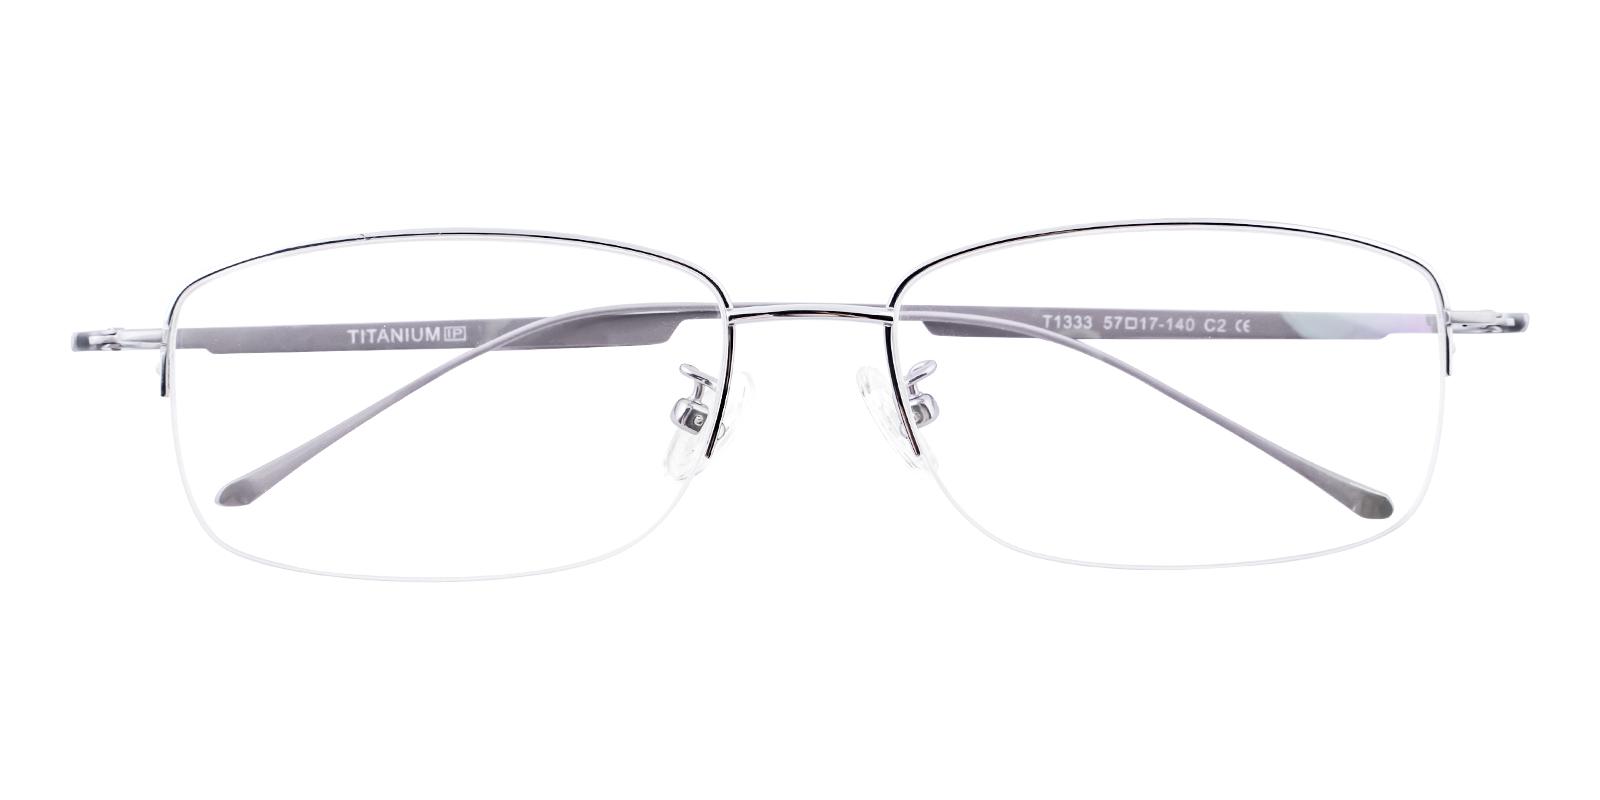 Tatkin Silver Titanium Eyeglasses , NosePads Frames from ABBE Glasses